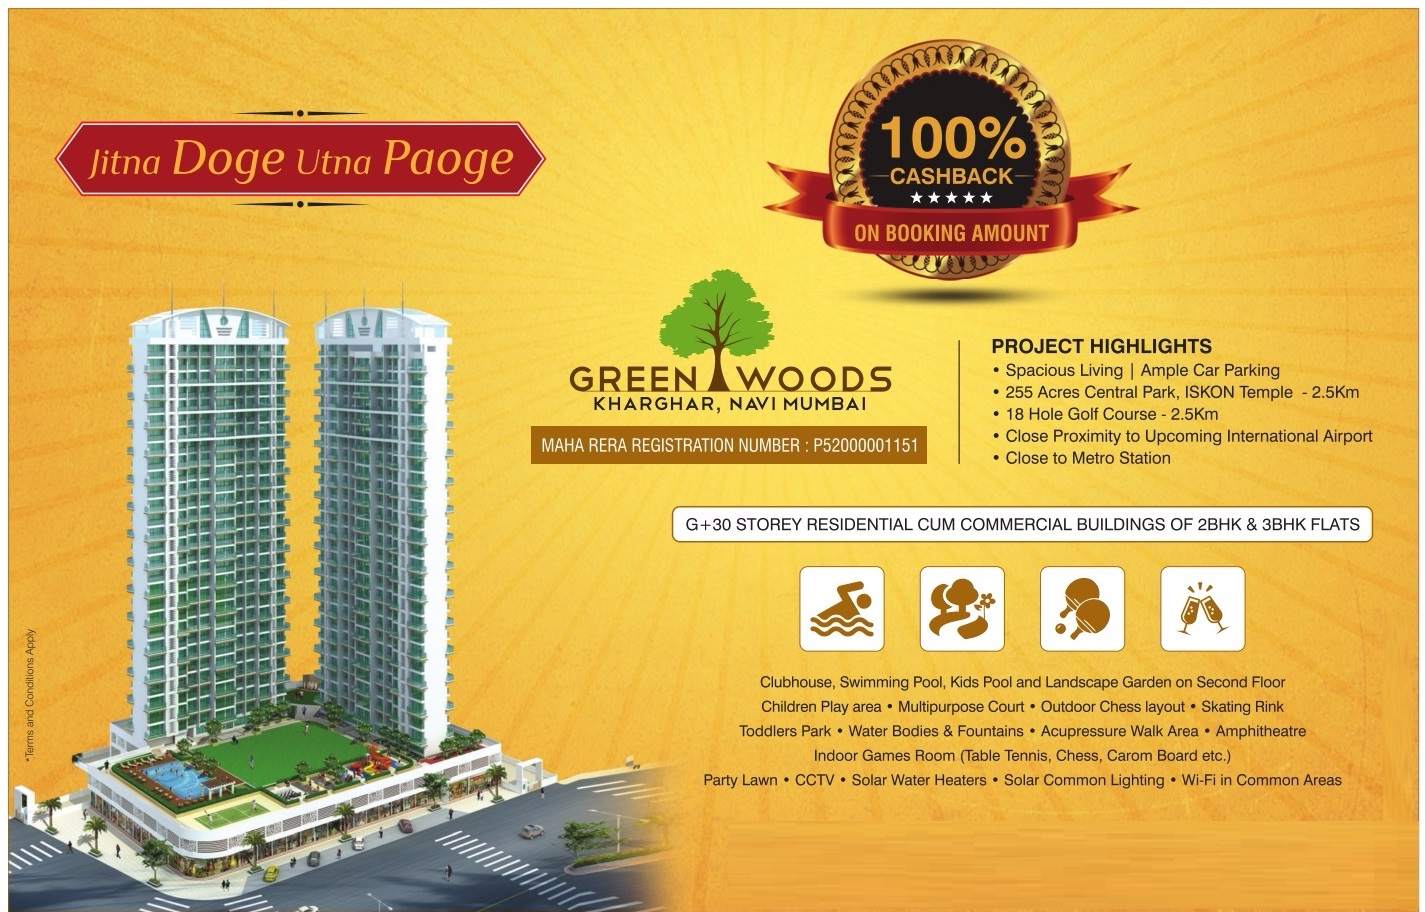 Get 100% cashback on booking amount at Proviso Green Woods in Navi Mumbai